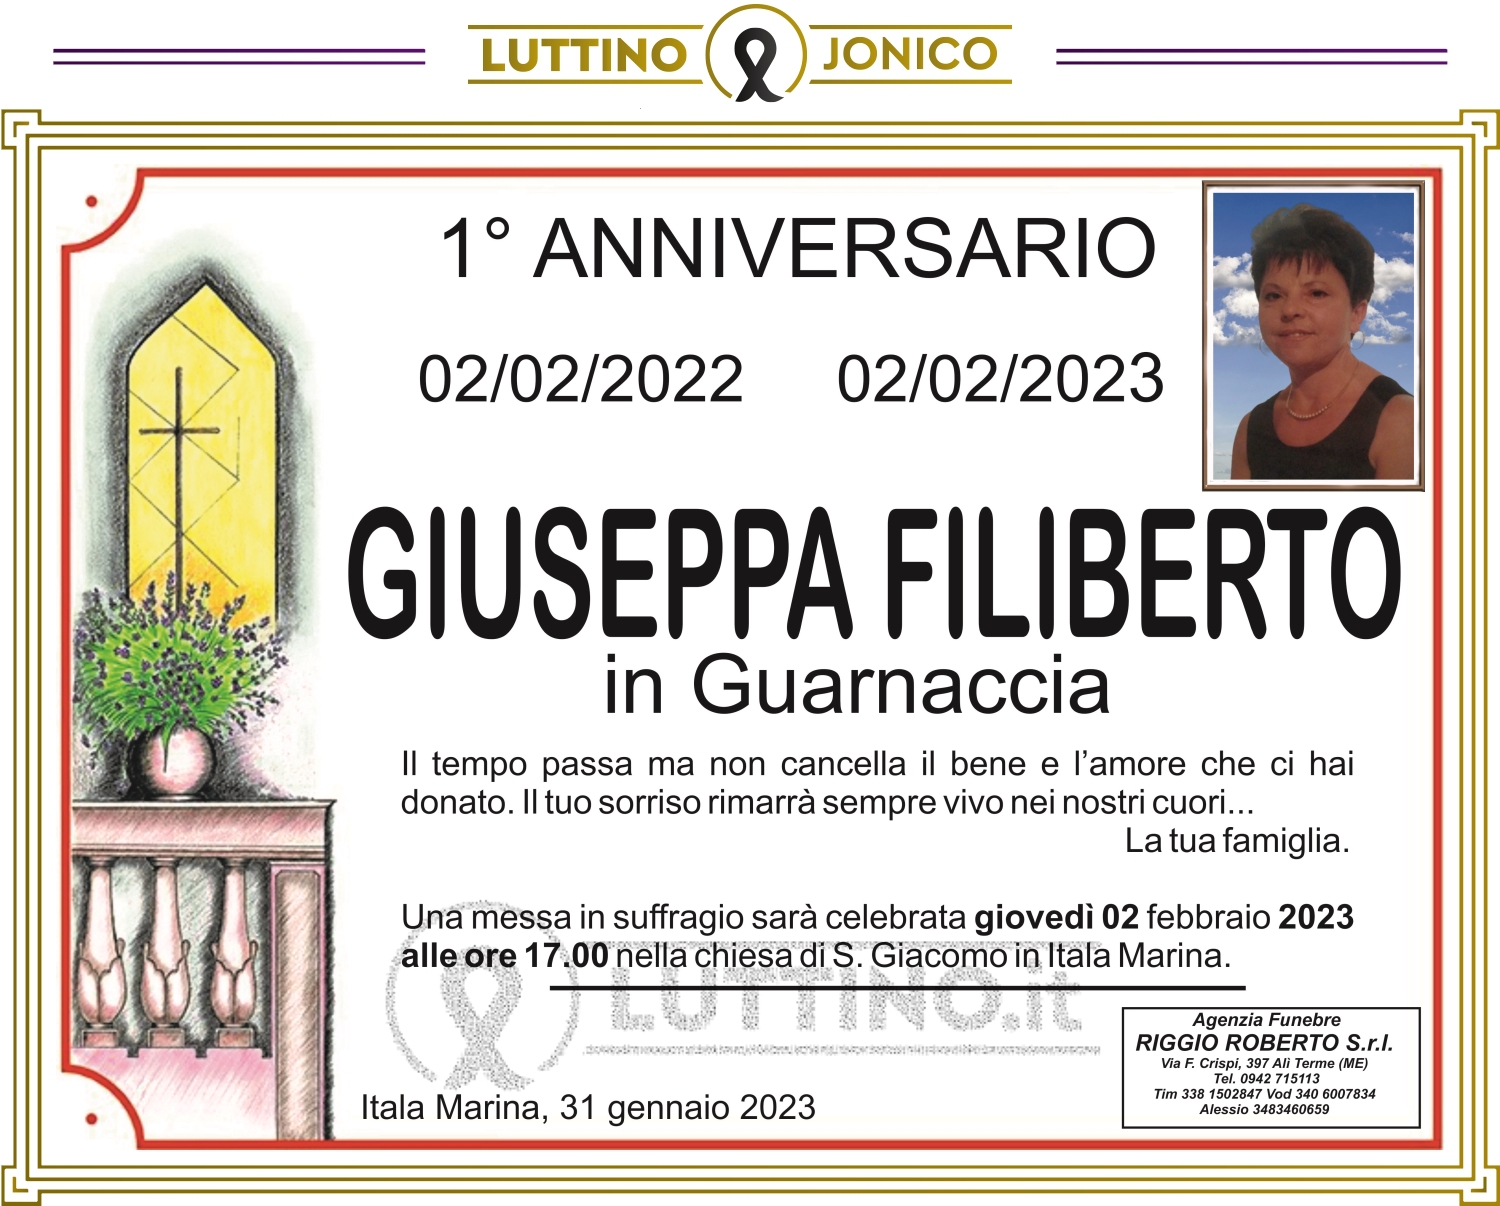 Giuseppa Filiberto 